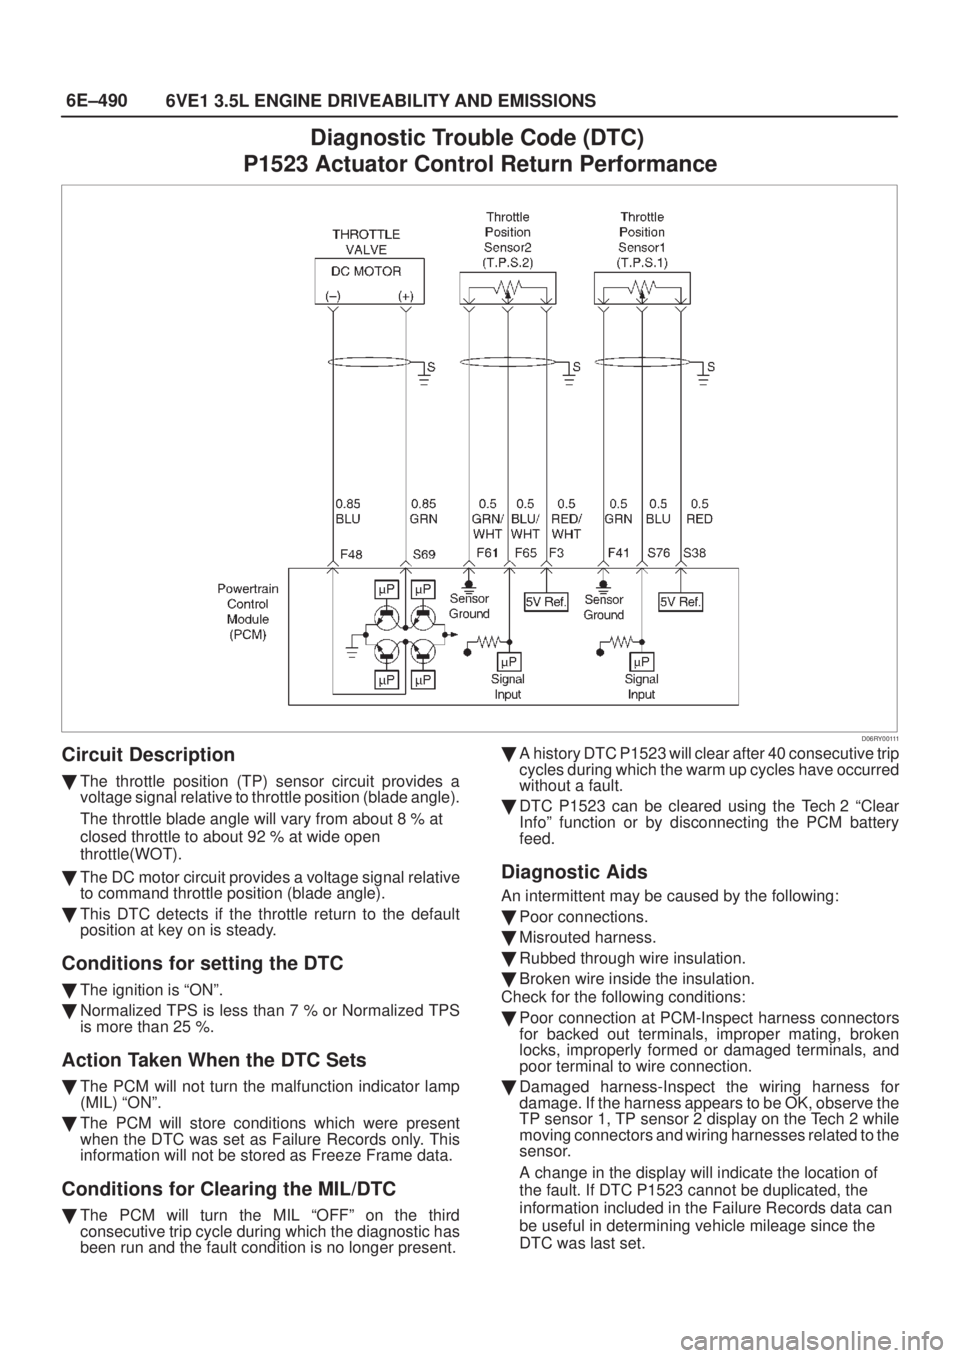 ISUZU AXIOM 2002  Service Repair Manual 6E±490
6VE1 3.5L ENGINE DRIVEABILITY AND EMISSIONS
Diagnostic Trouble Code (DTC) 
P1523 Actuator Control Return Performance
D06RY00111
Circuit Description
The throttle position (TP) sensor circuit p